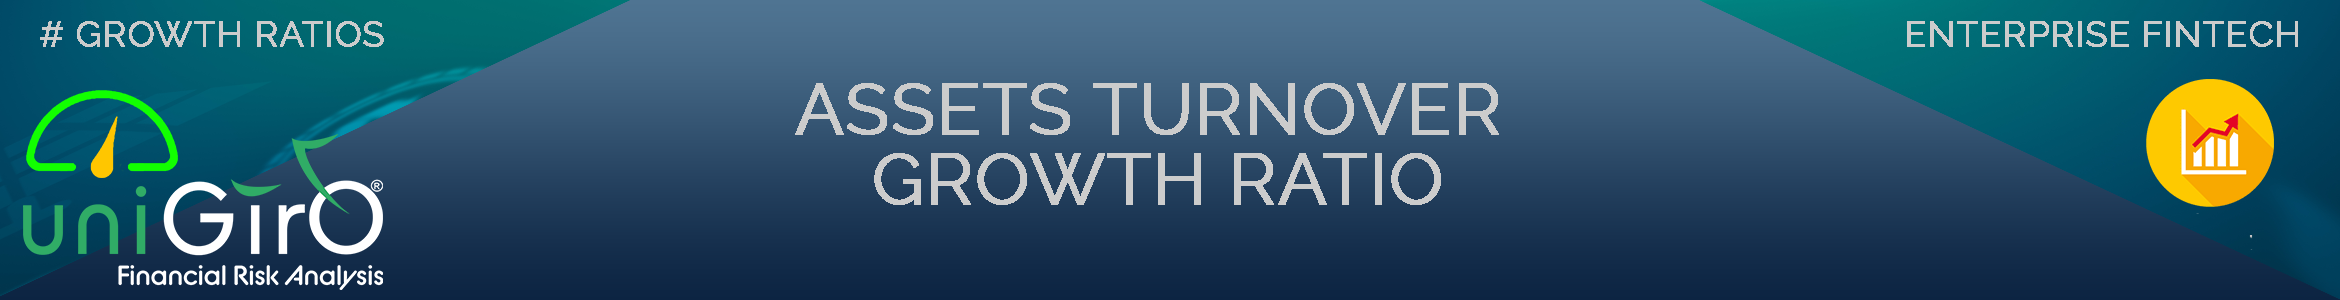 Turnover growth ratio